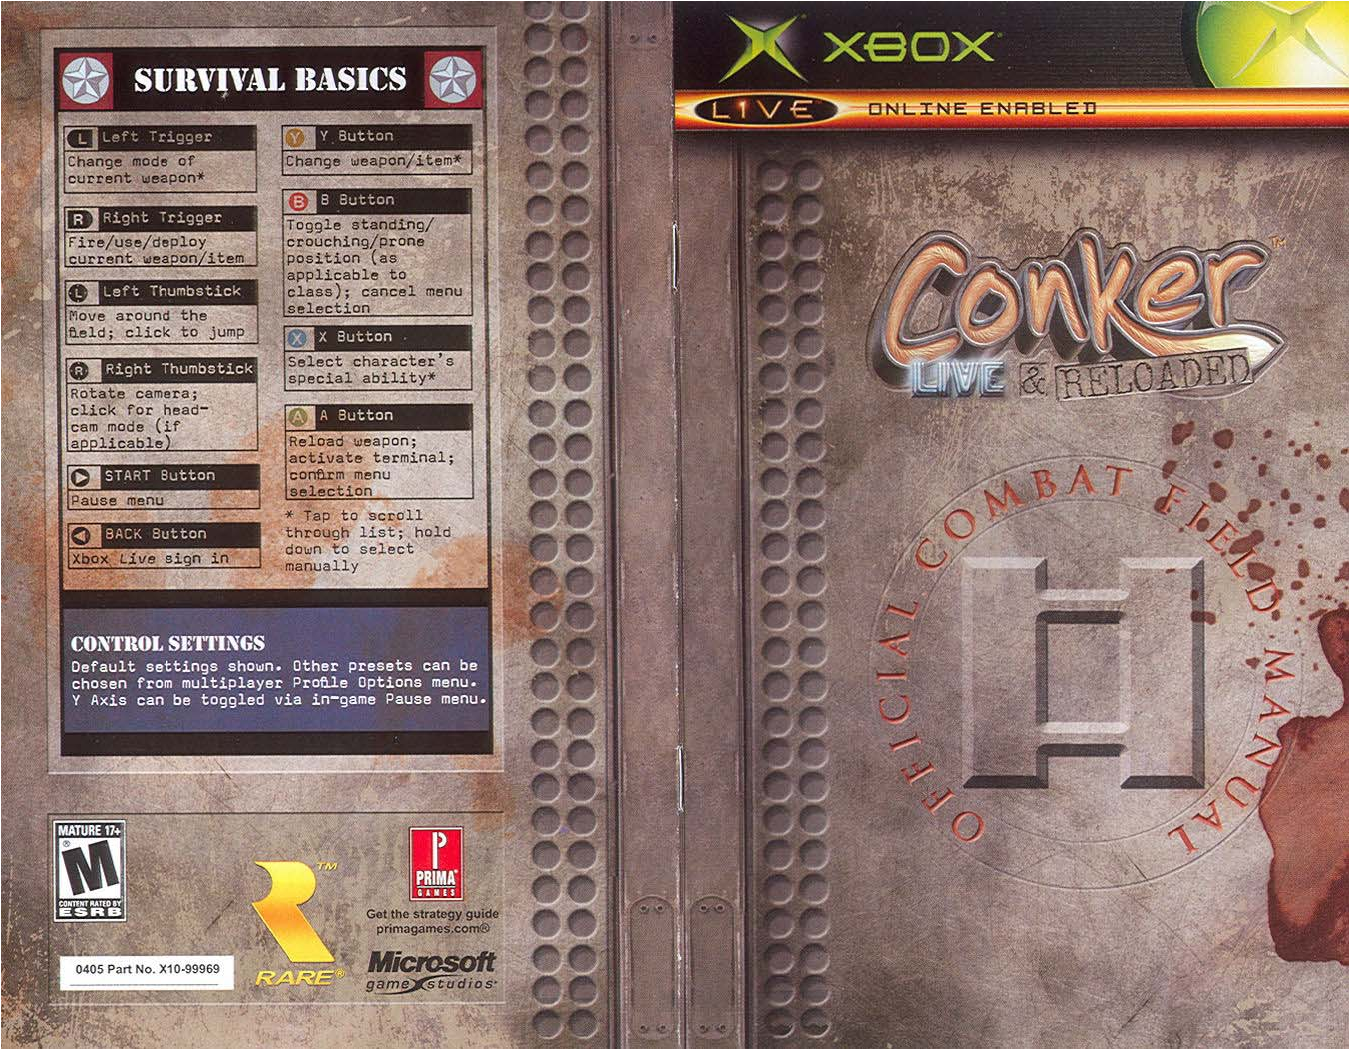 Games Microsoft XBOX CONKER-LIVE & RELOADED User Manual